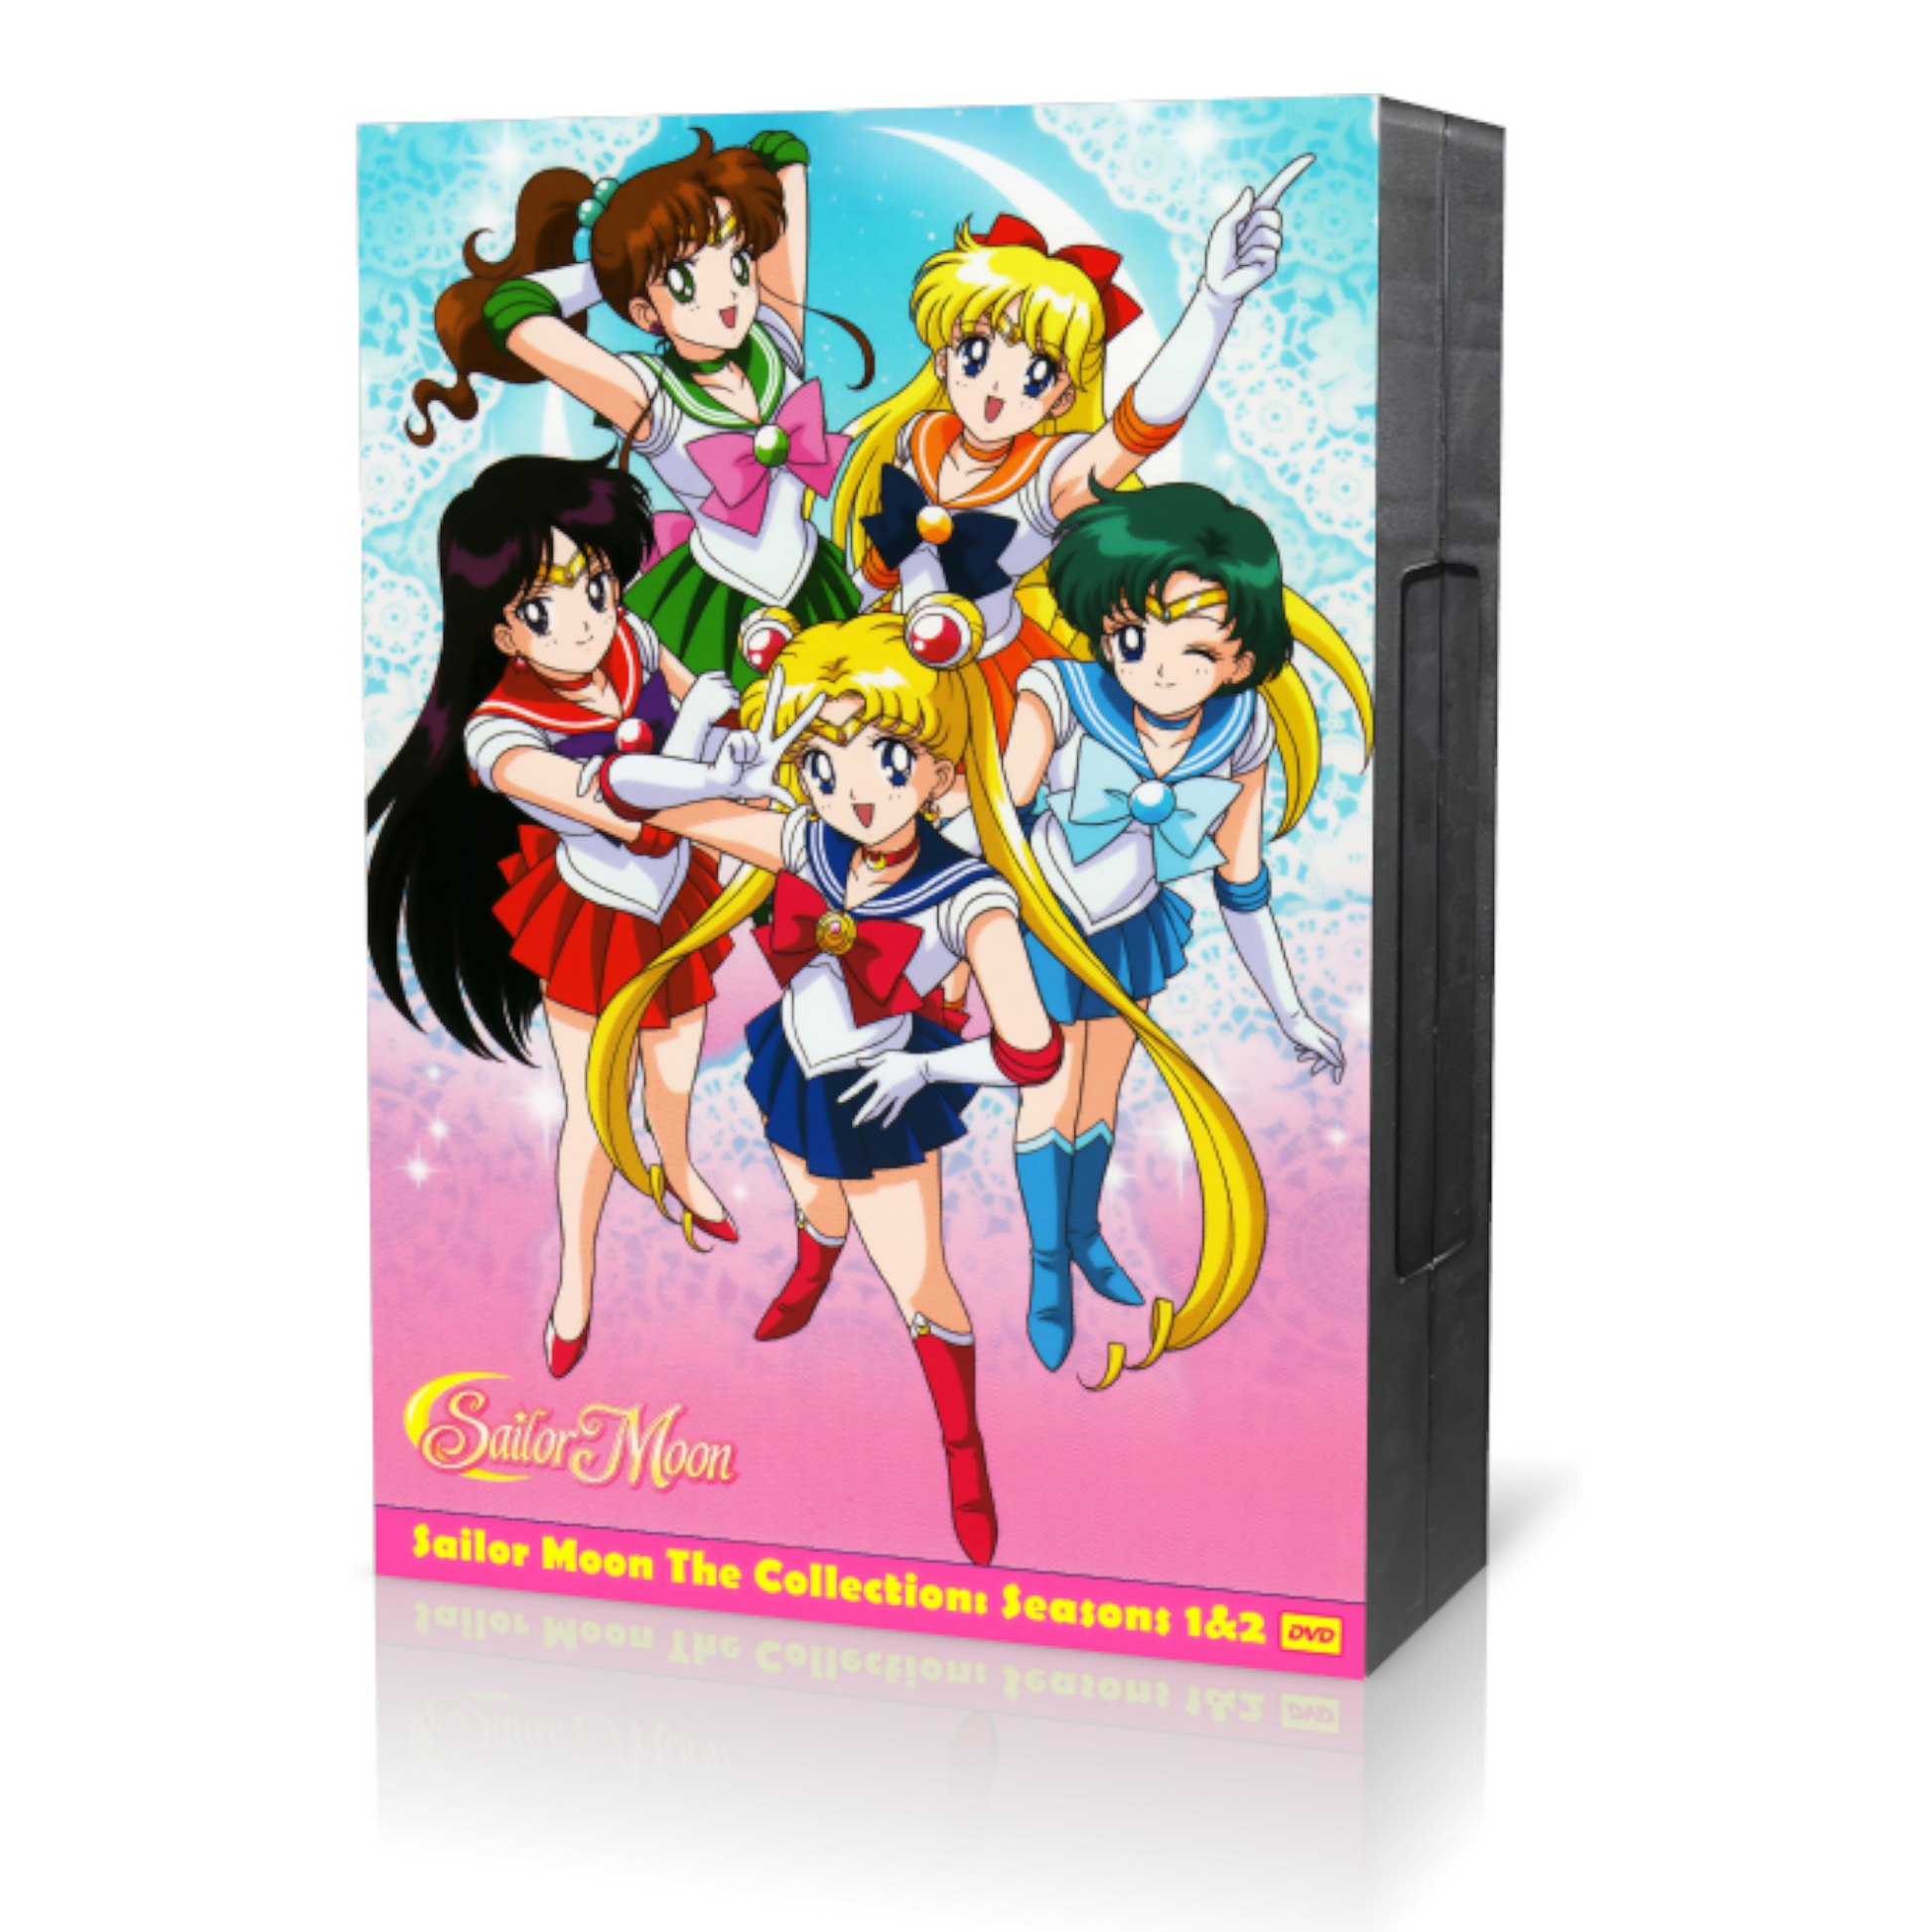 Sailor Moon DVD English Seasons 1+2 Boxset (DiC dub) - RetroAnimation 